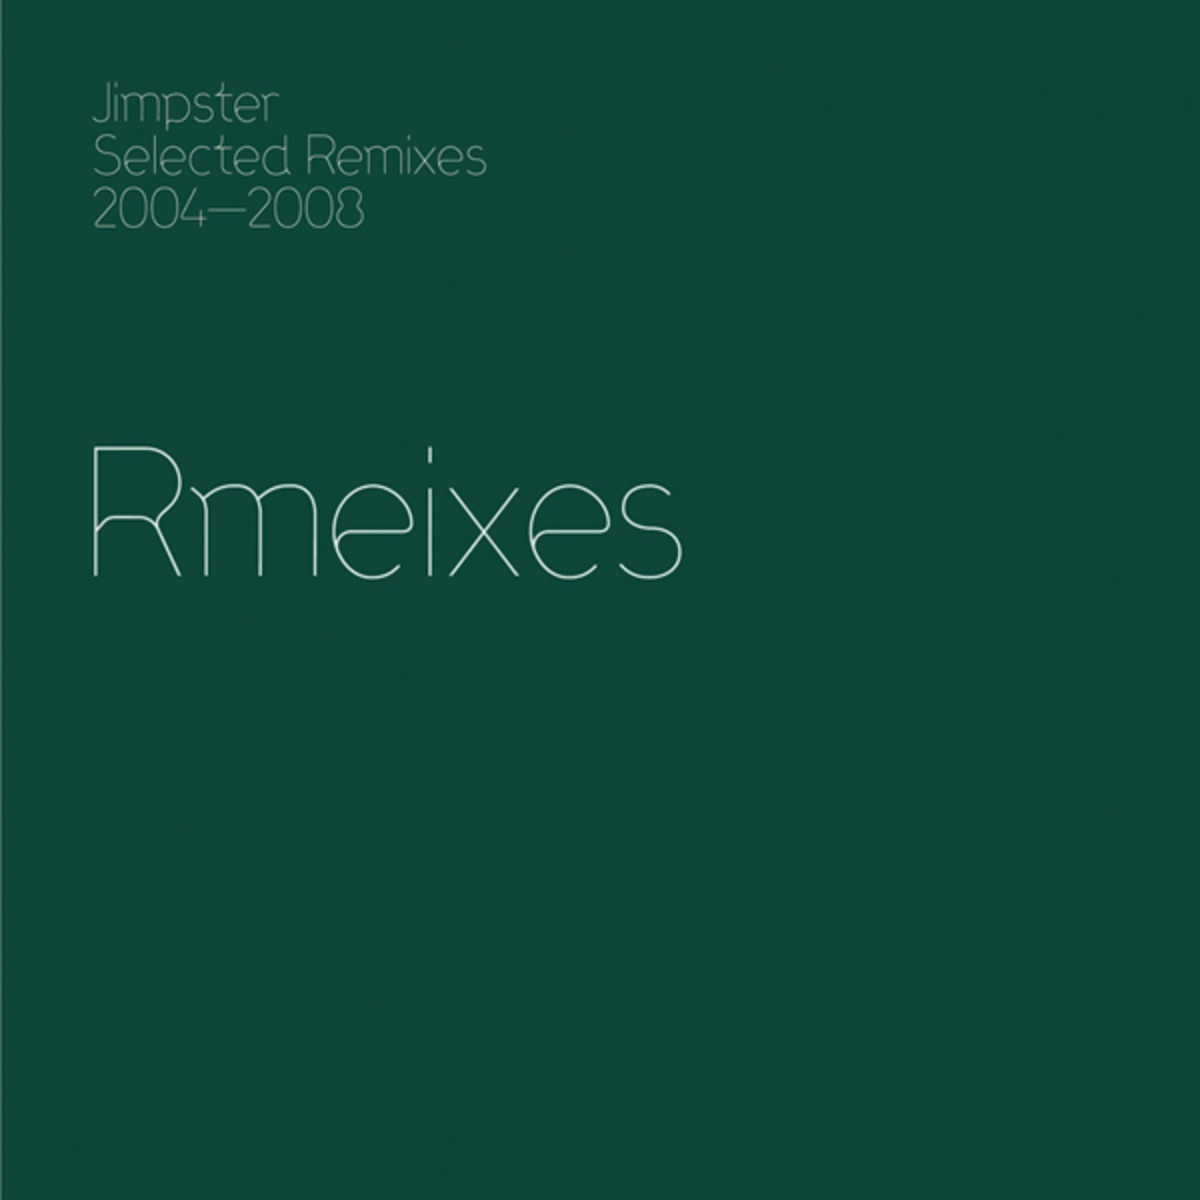 Siempre - Jimpster Remix